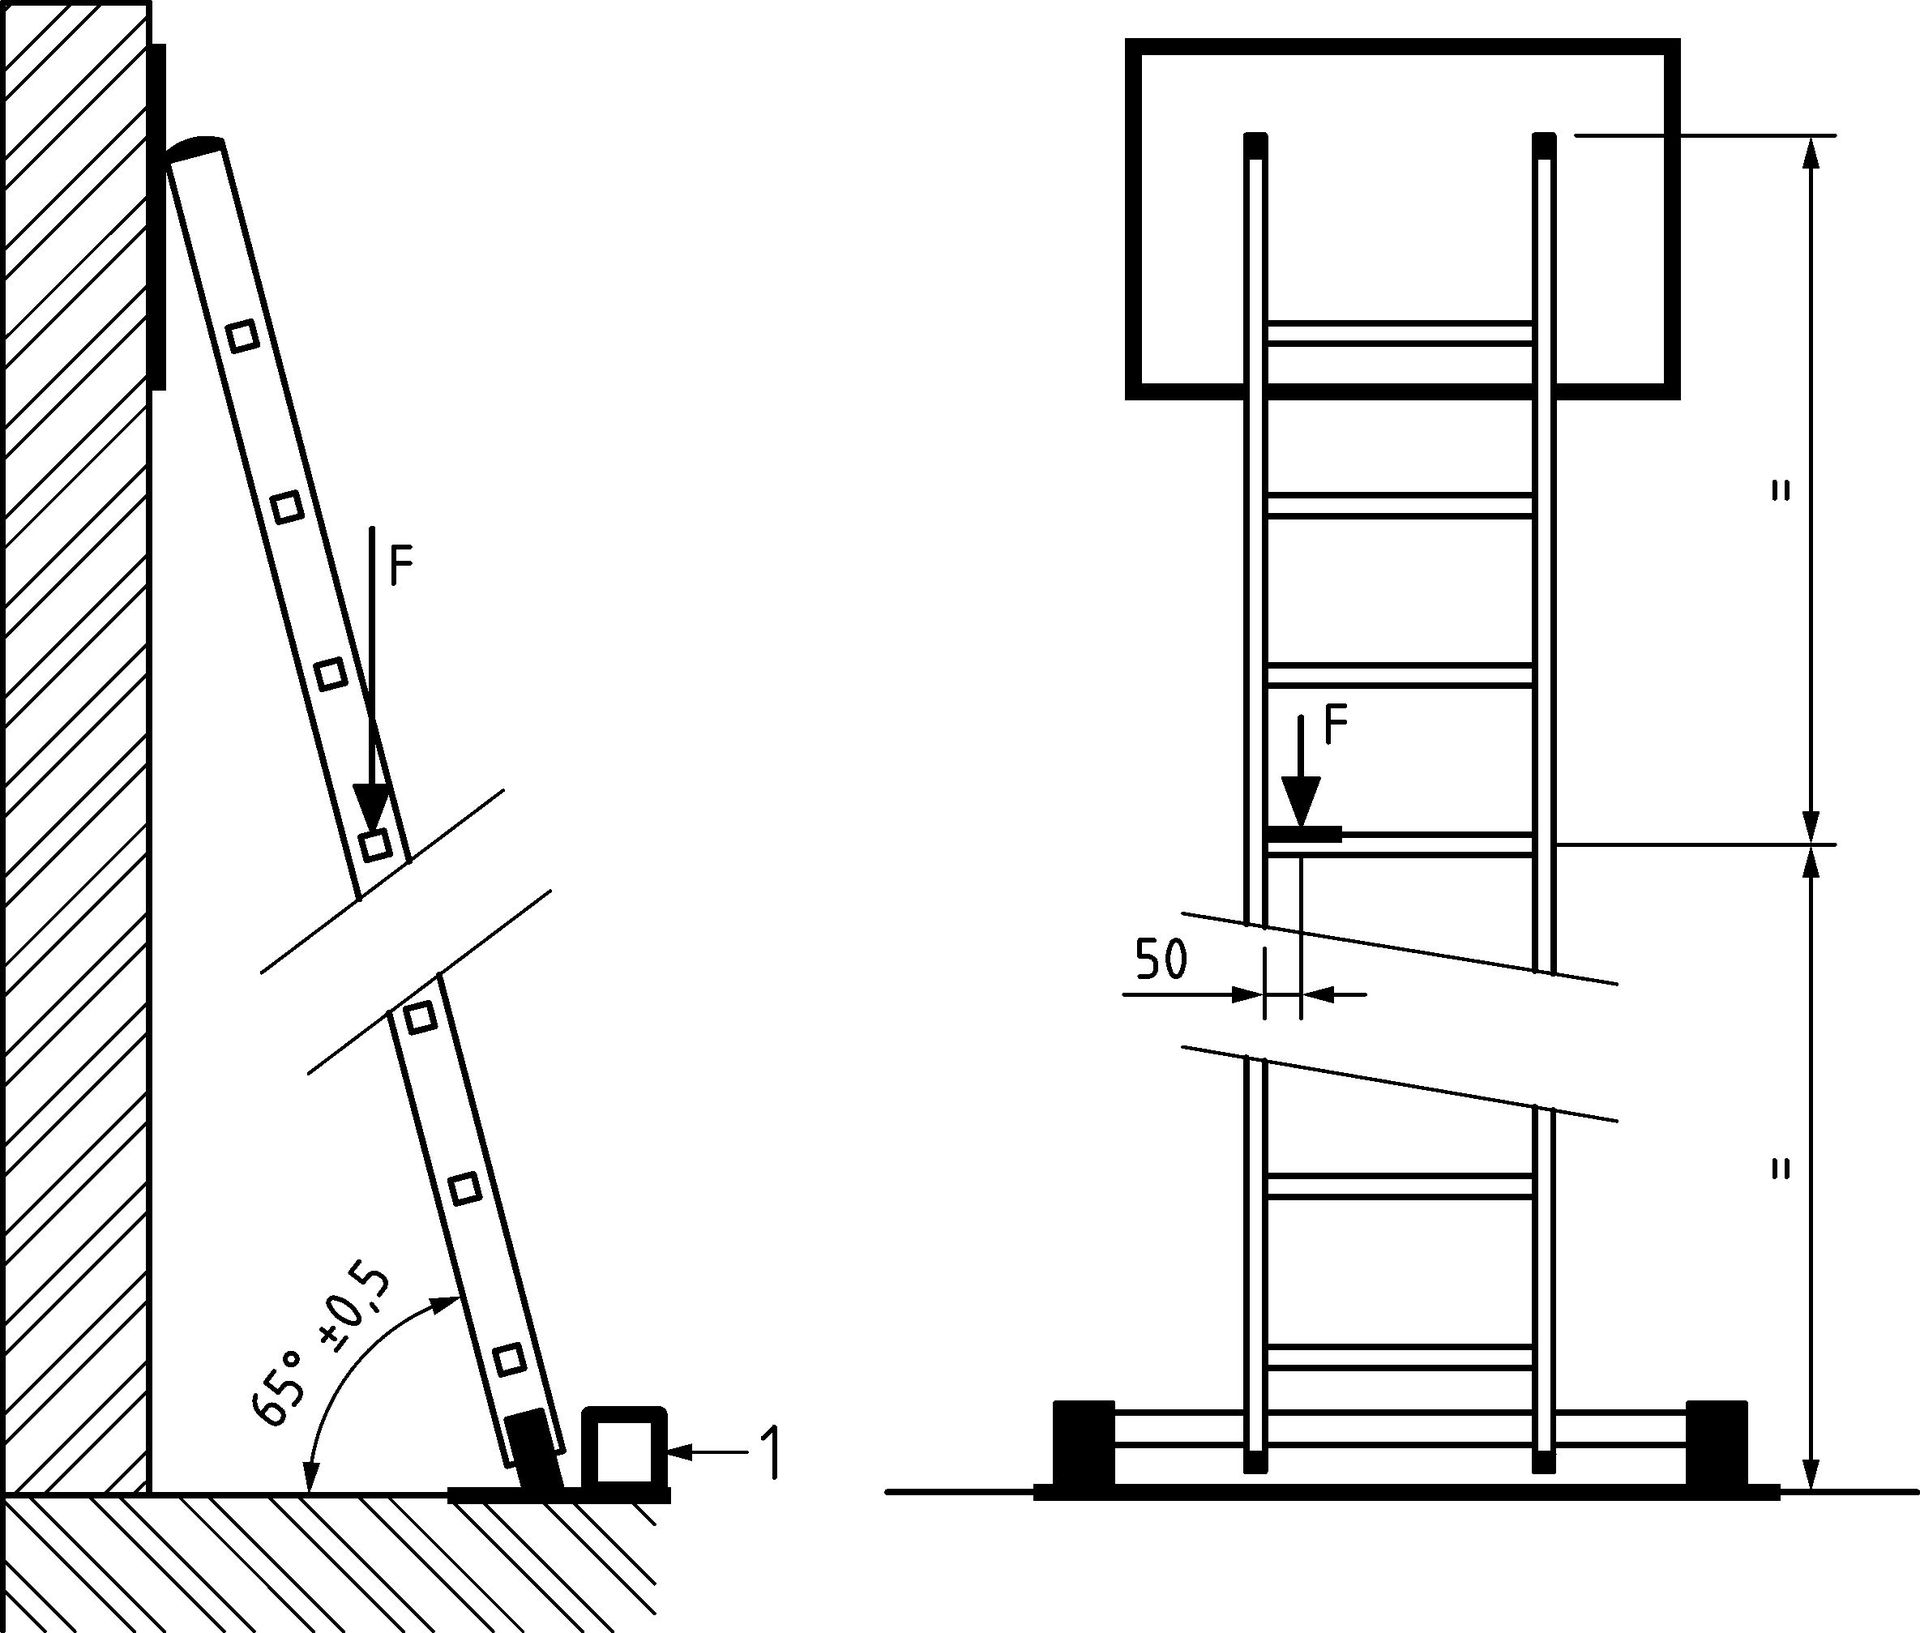 Leaning Ladder Test (The Base Slip Test)